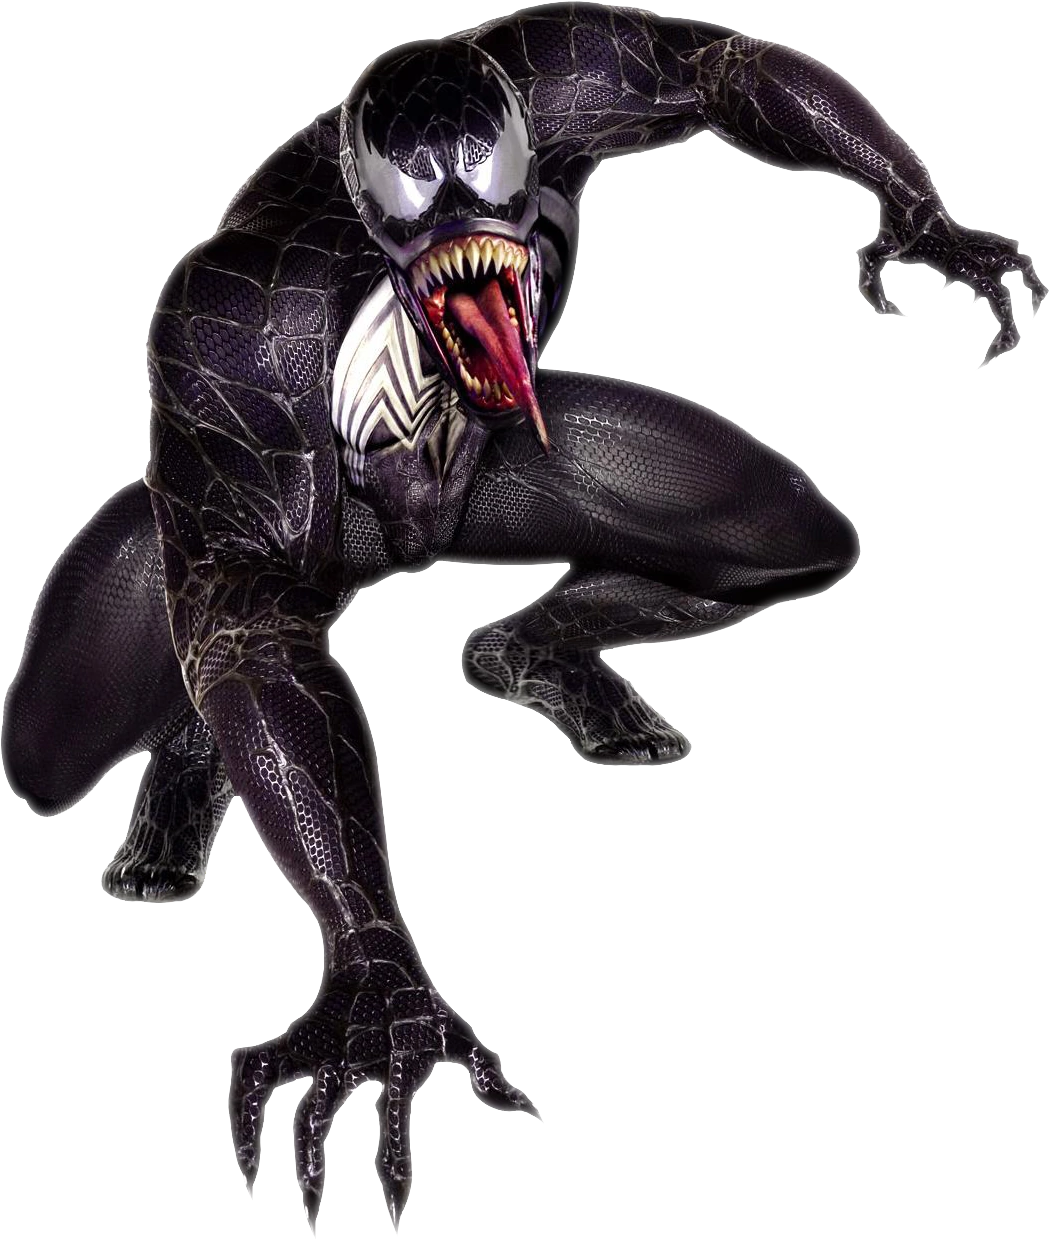 Is Venom the bad guy in Spider-Man?